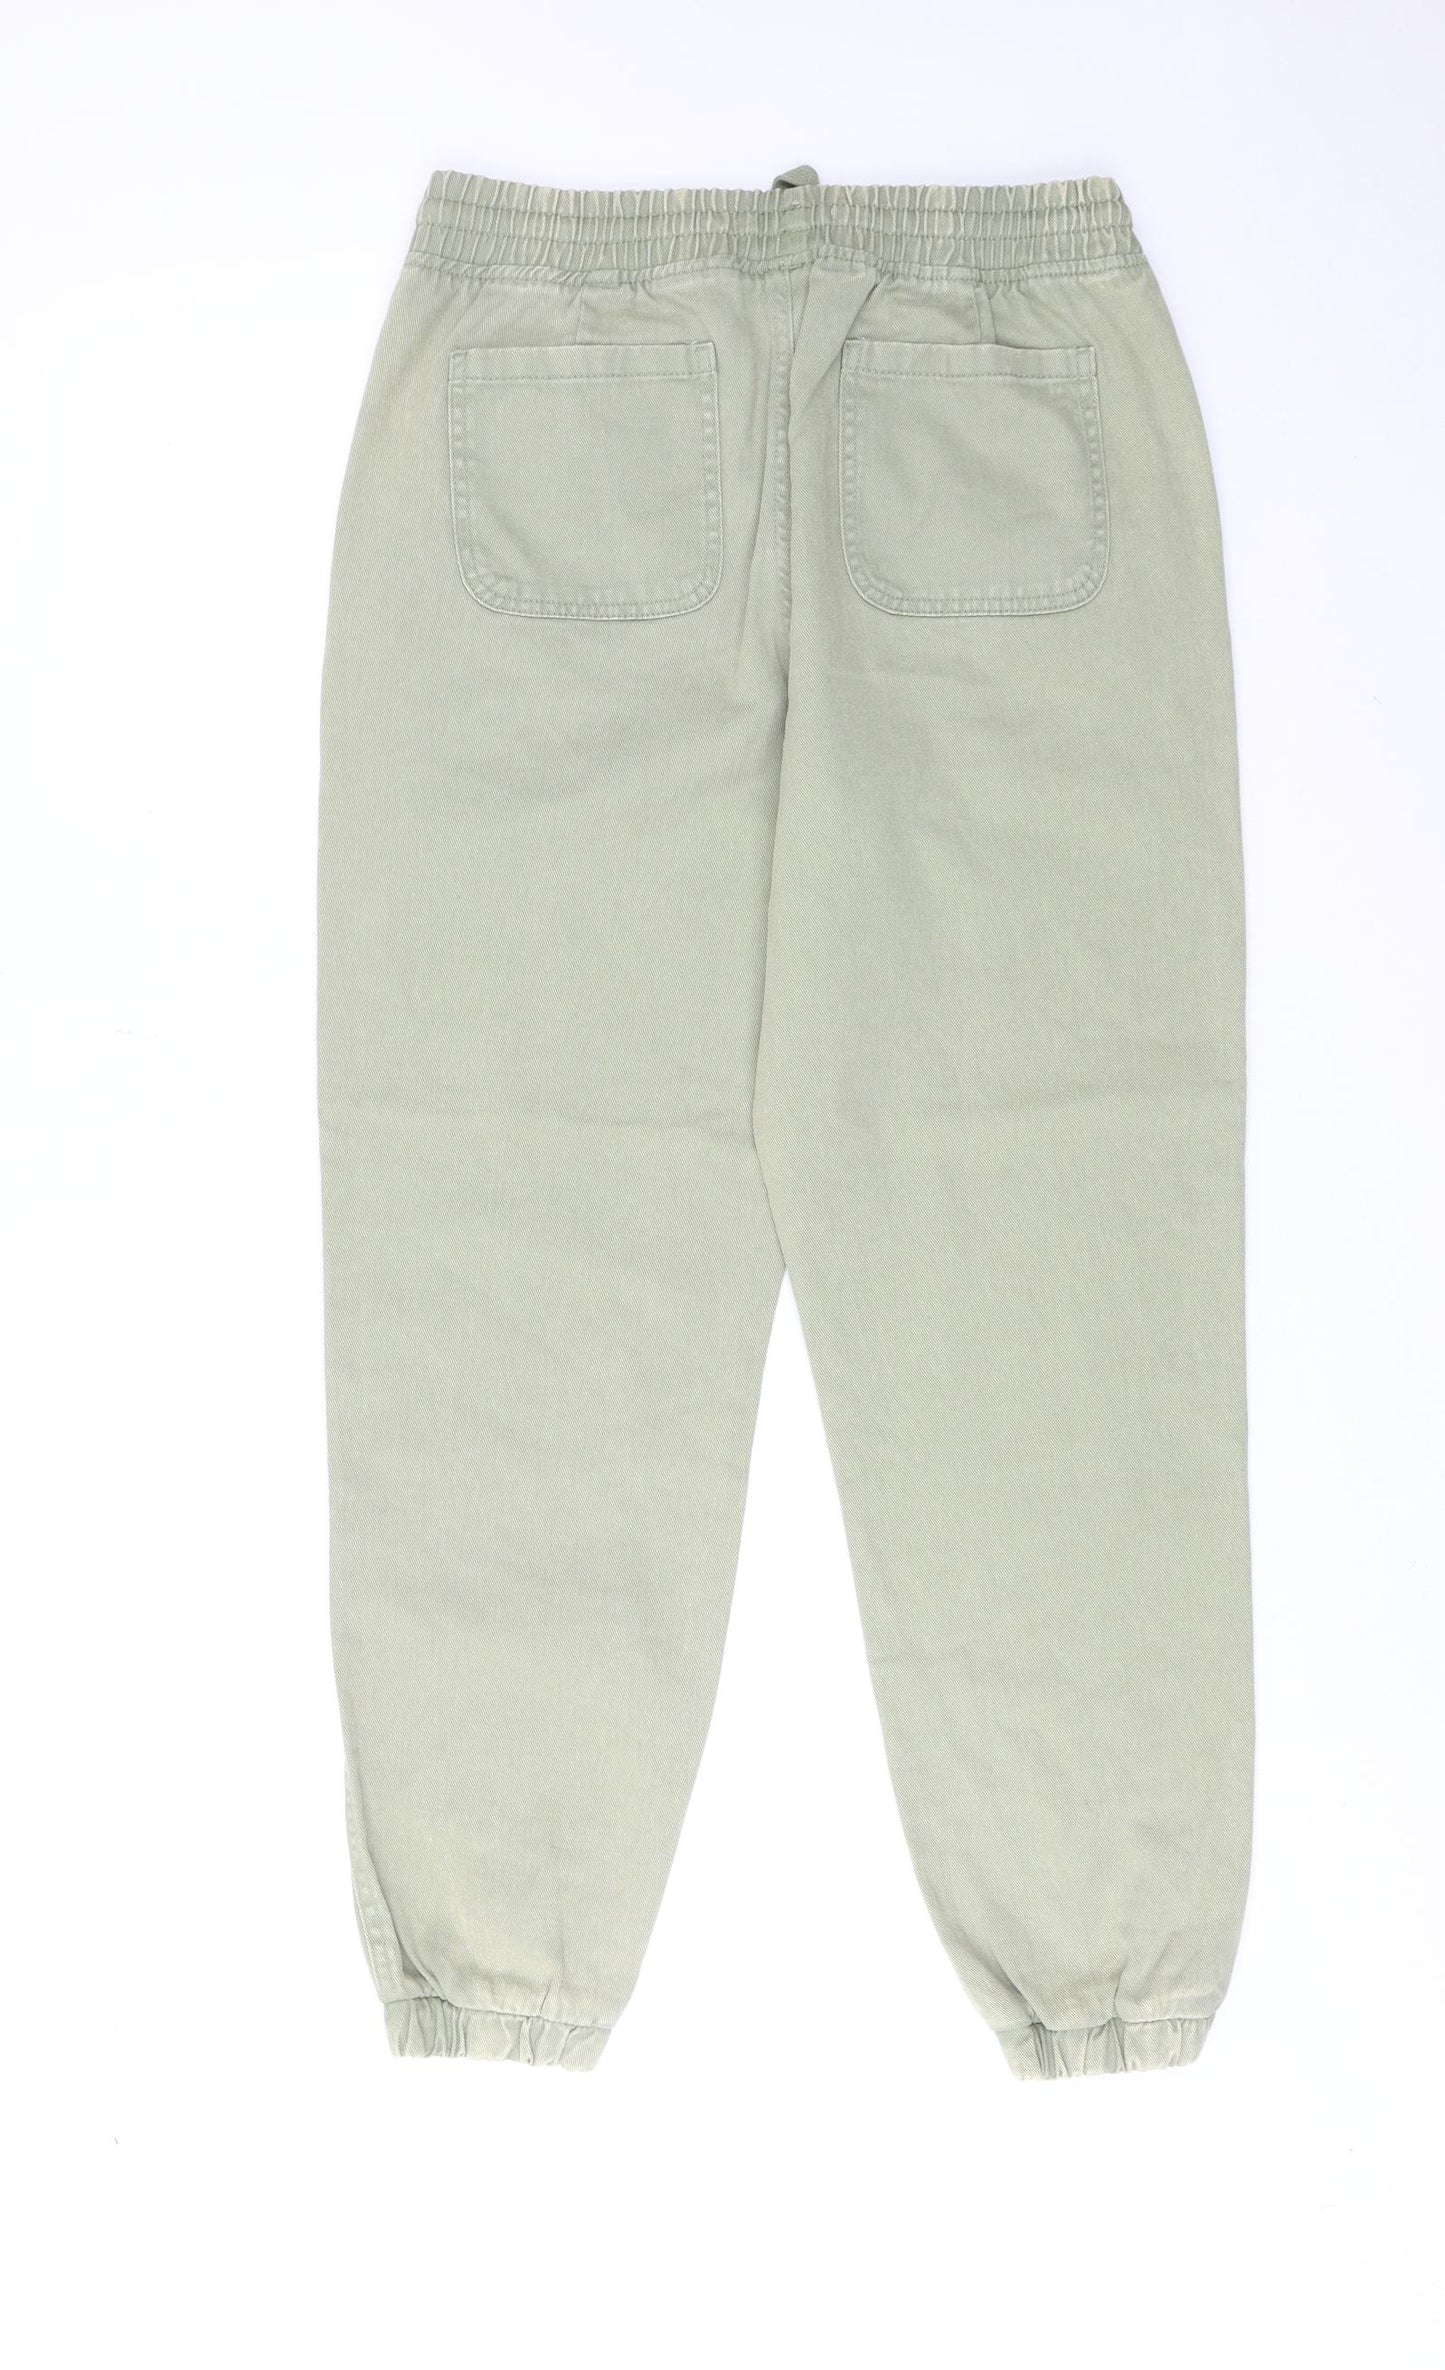 TU Womens Green Cotton Tapered Jeans Size 12 Regular Drawstring